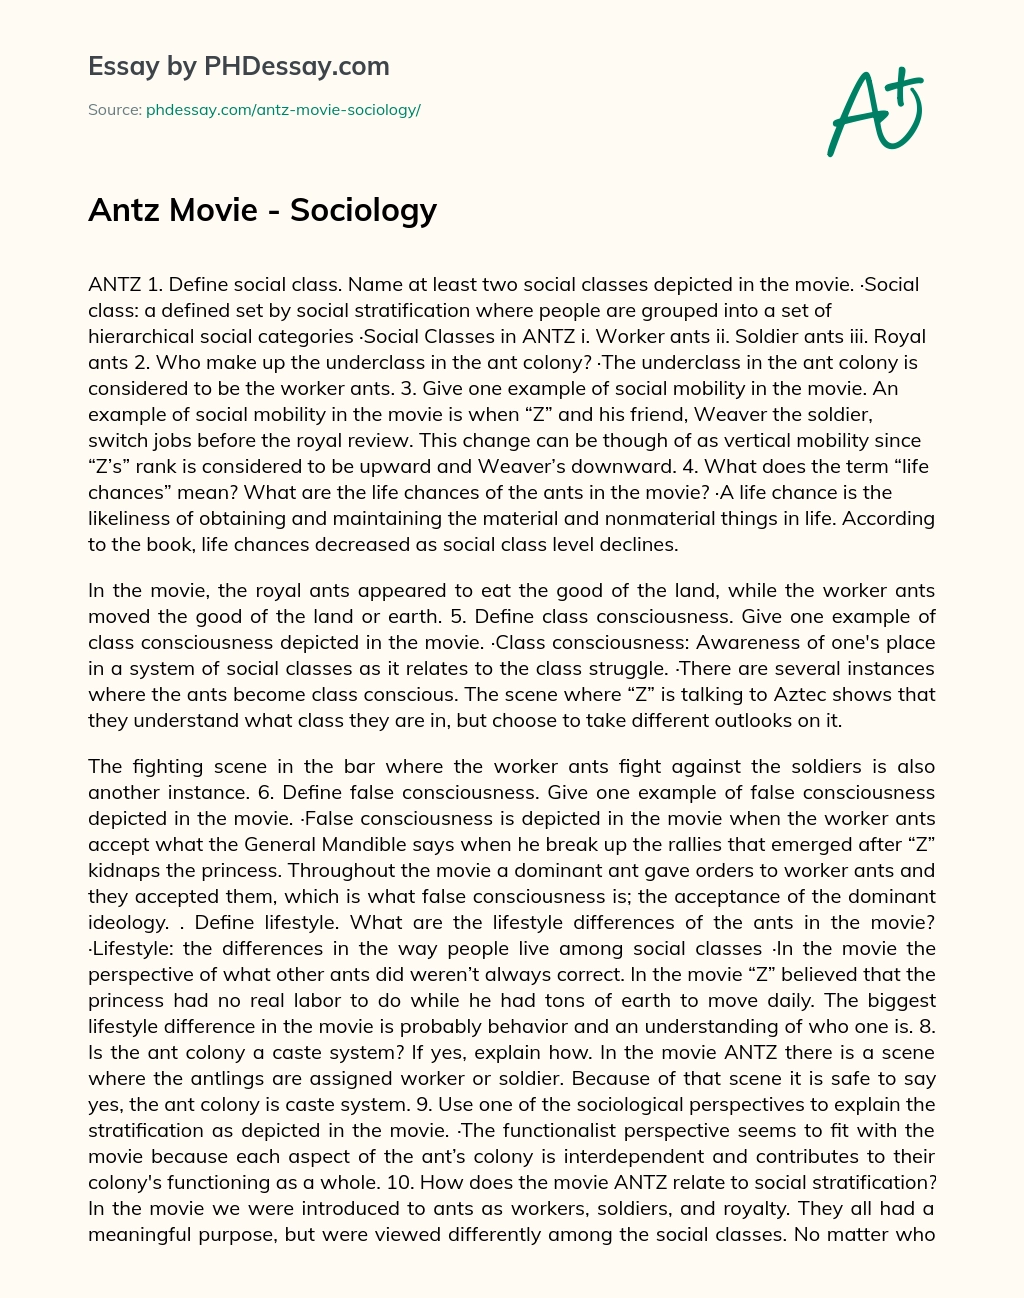 Antz Movie – Sociology essay